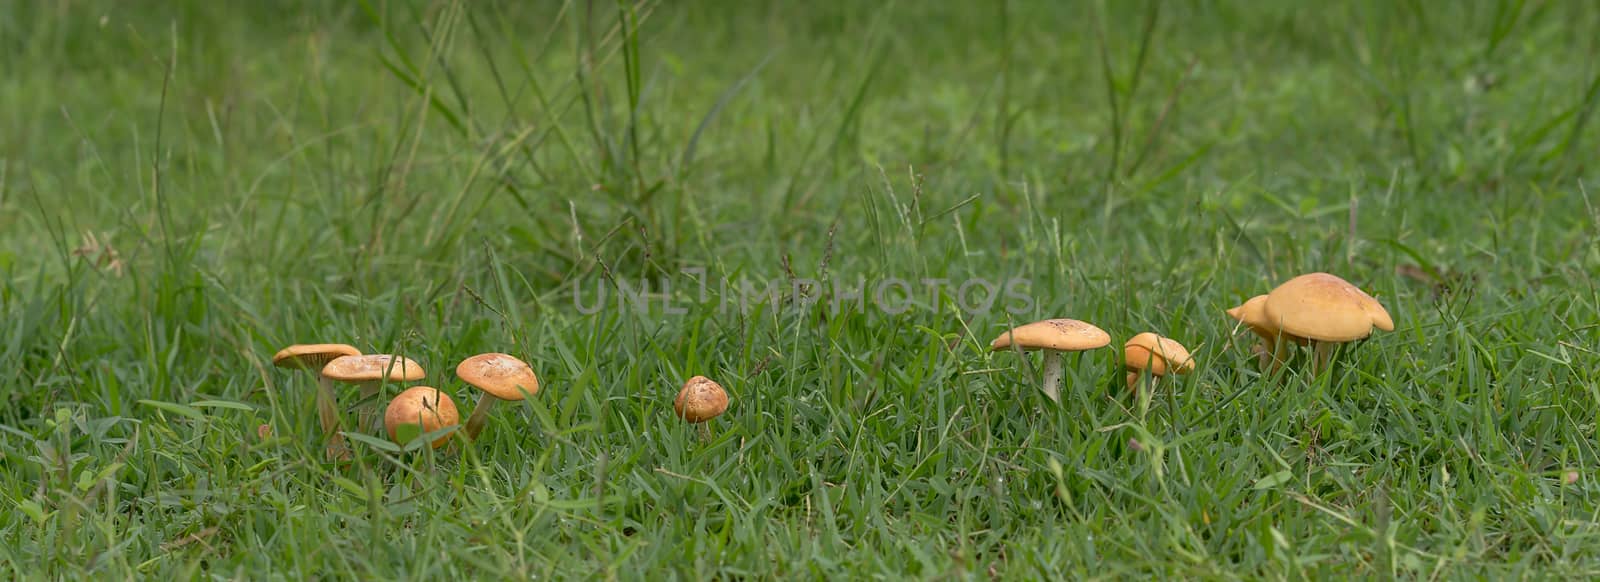 Mushrooms growing panorama by sherj